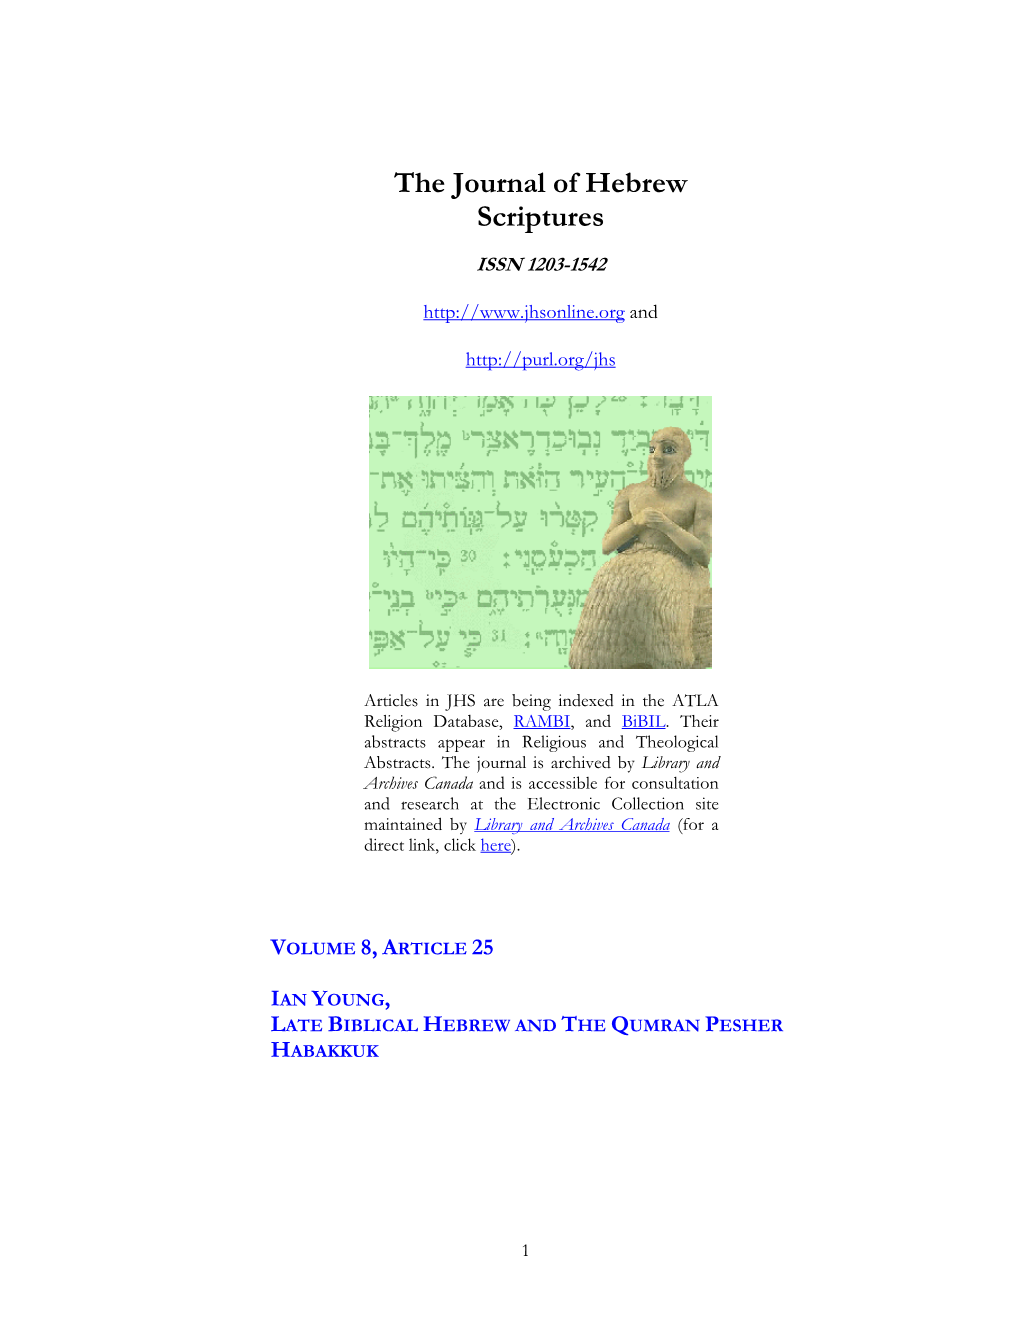 Late Biblical Hebrew and the Qumran Pesher Habakkuk